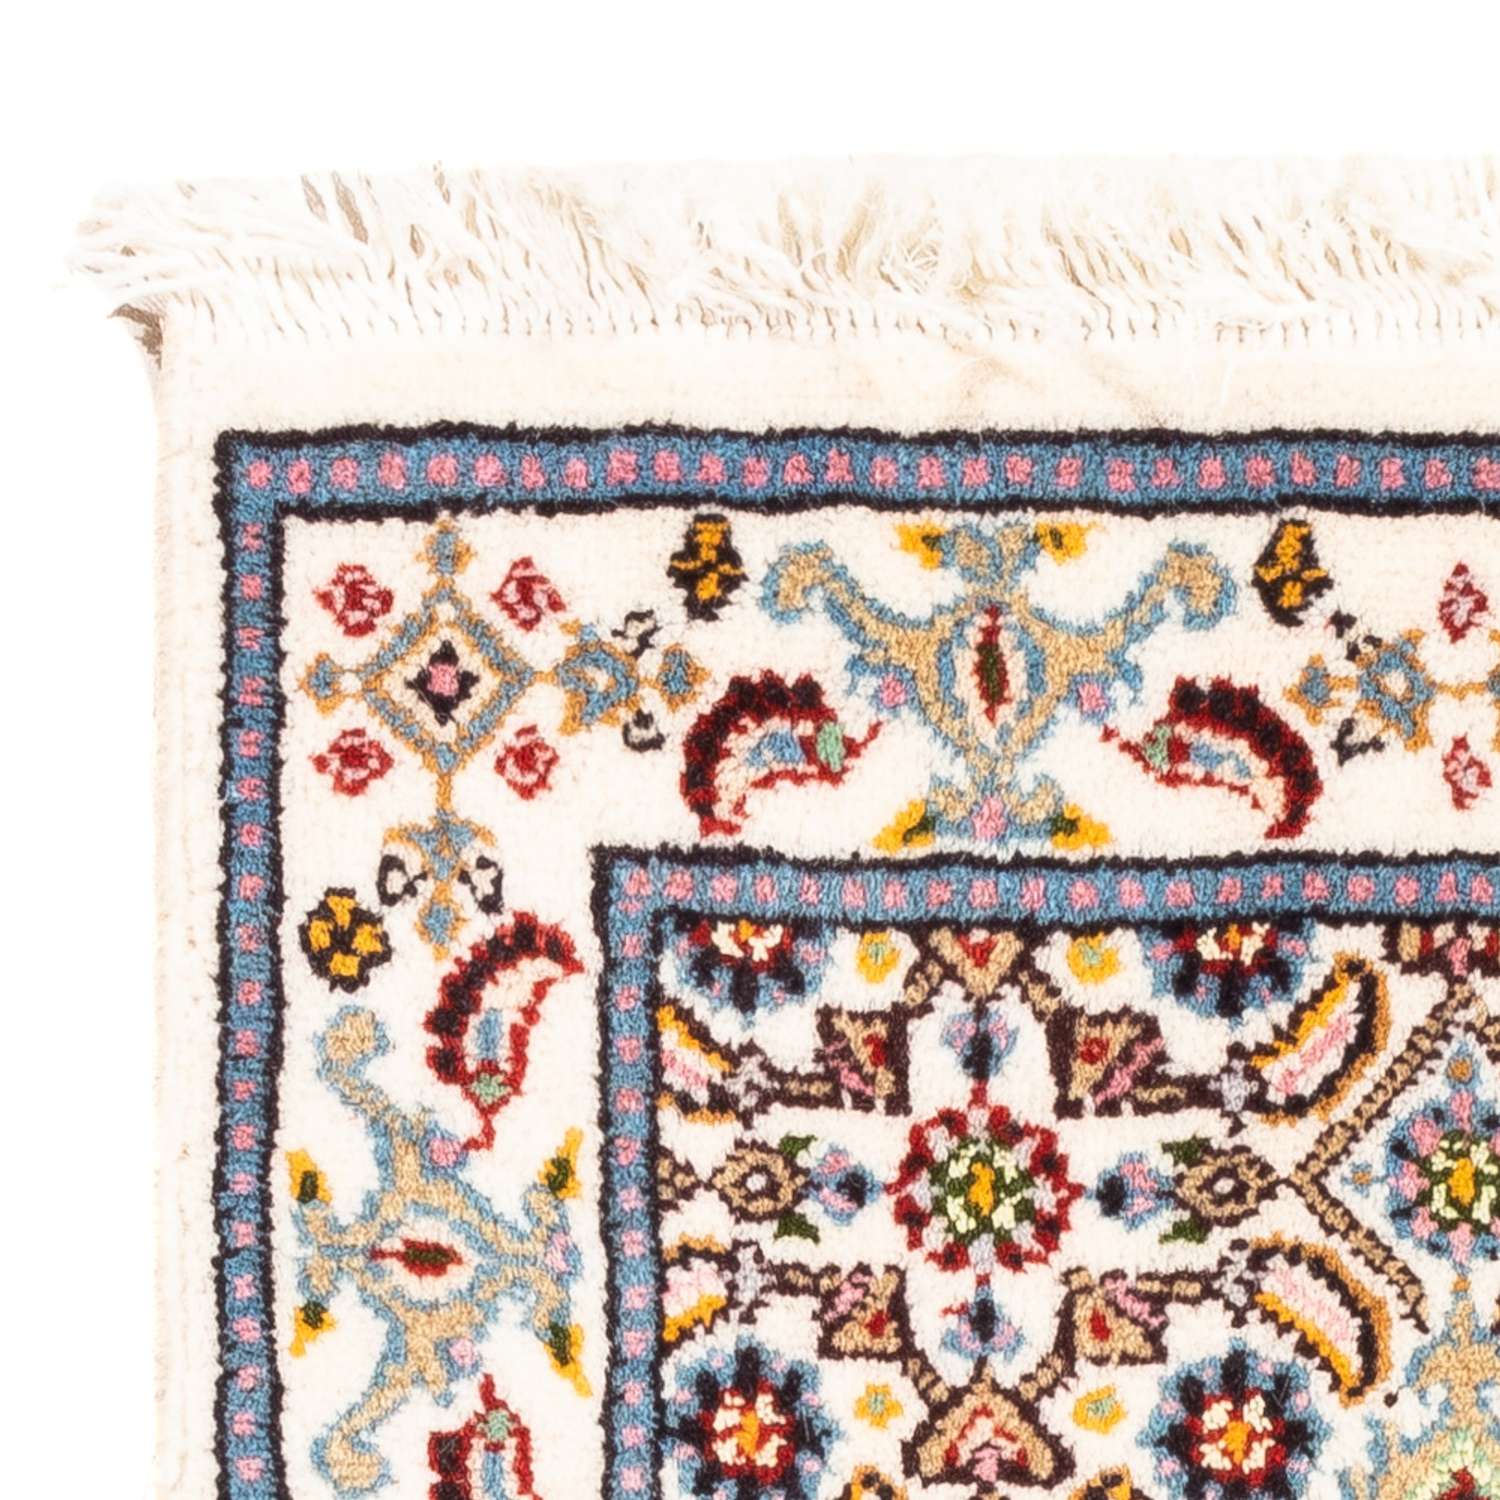 Tapis persan - Classique - Royal - 60 x 40 cm - multicolore